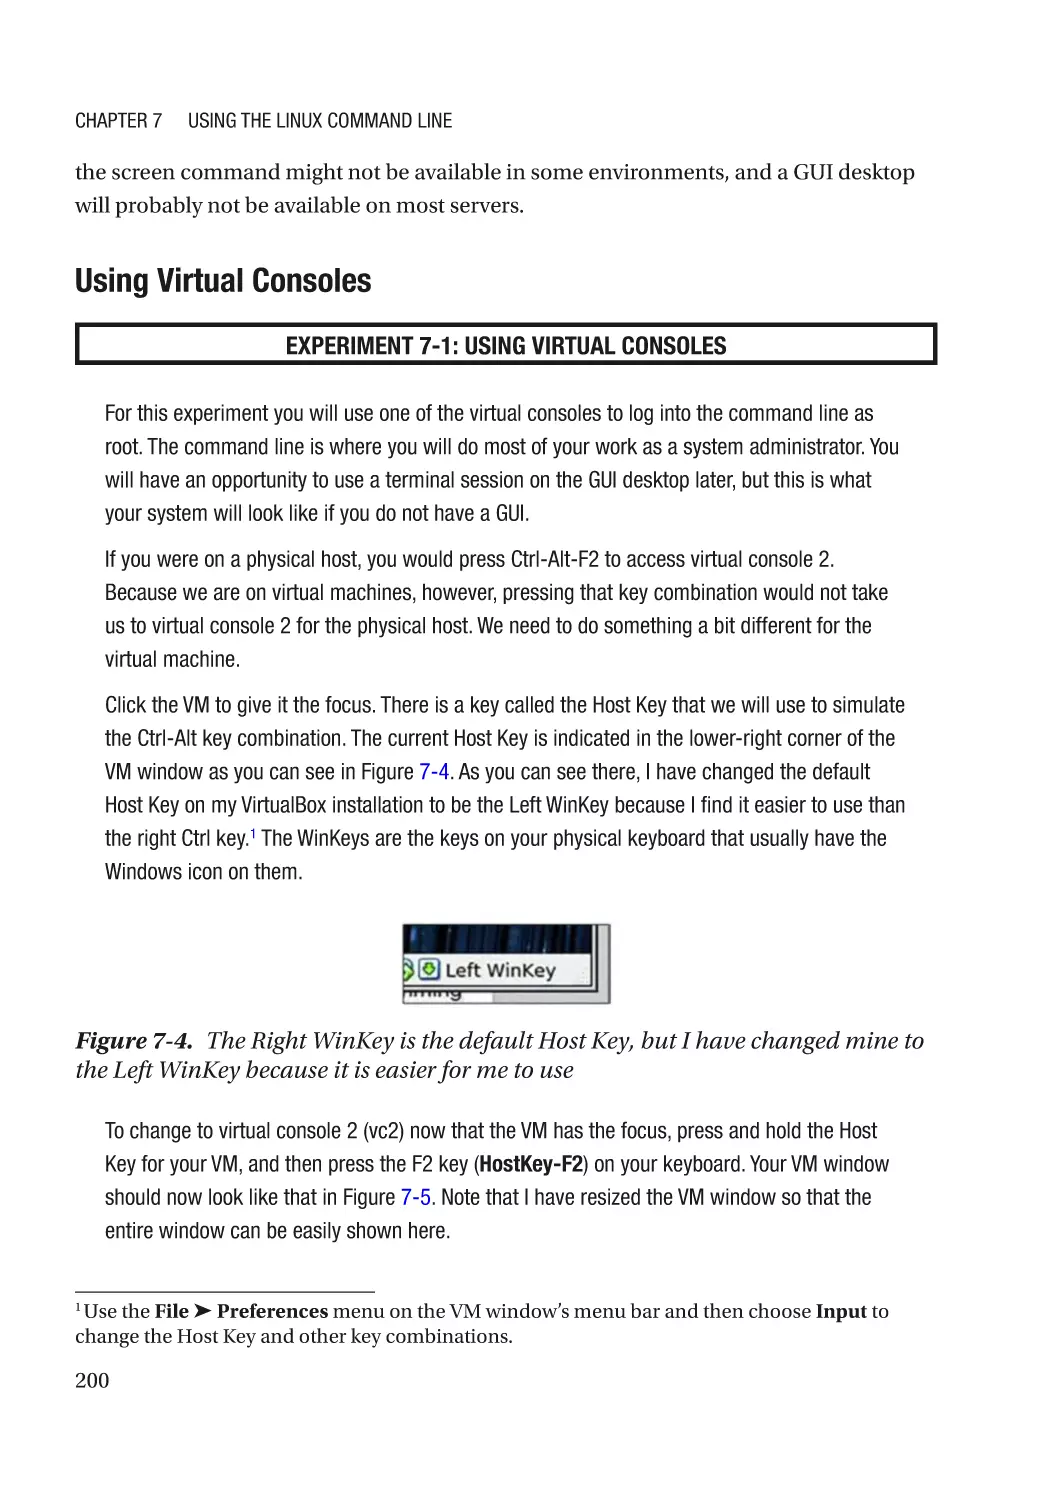 Using Virtual Consoles